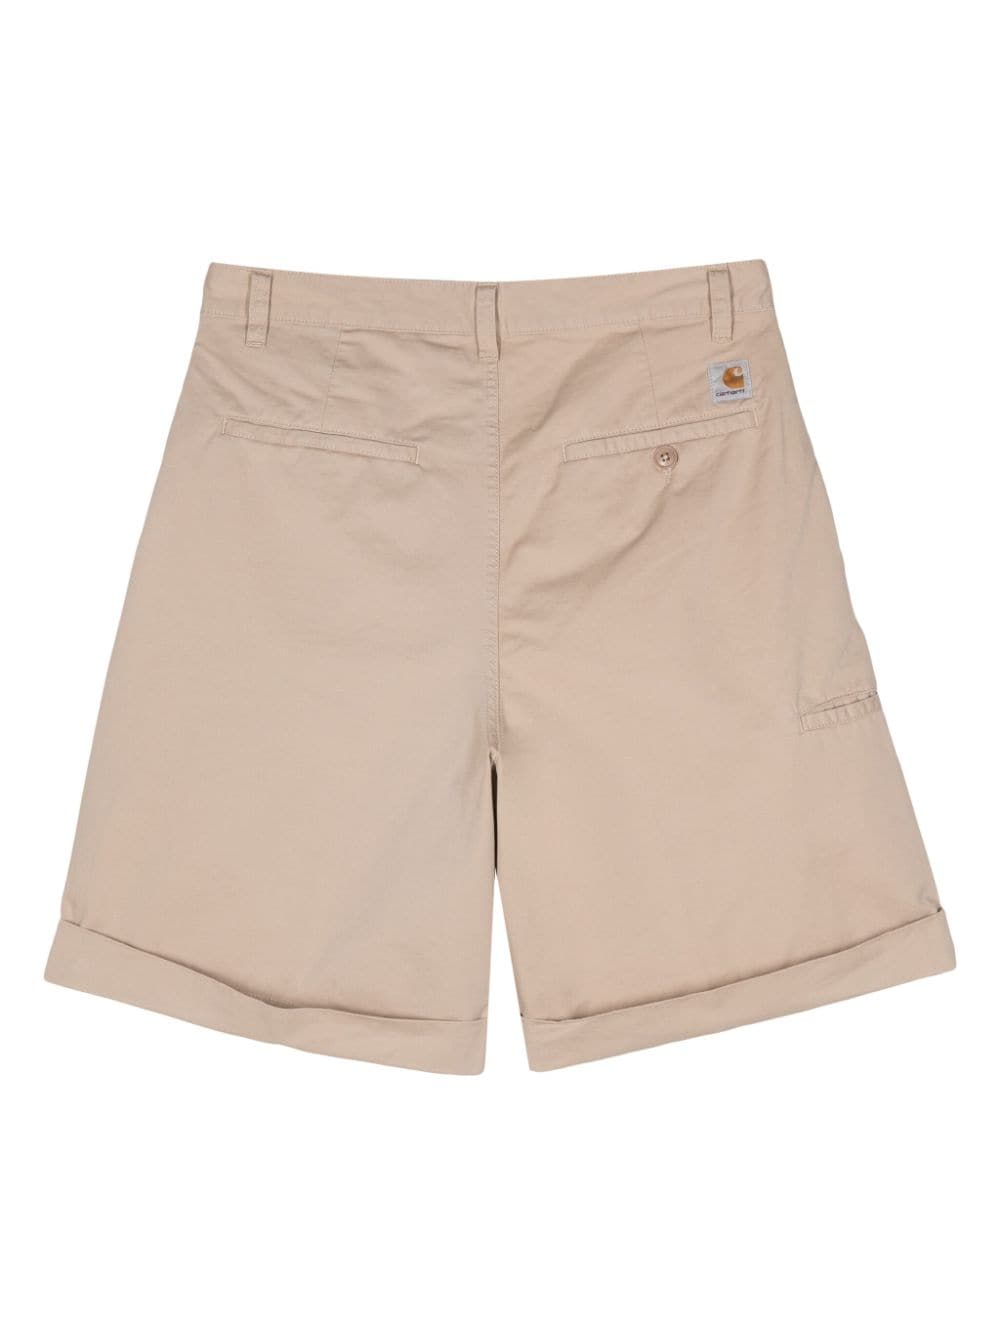 Carhartt WIP Lenexa geplooide shorts - Beige